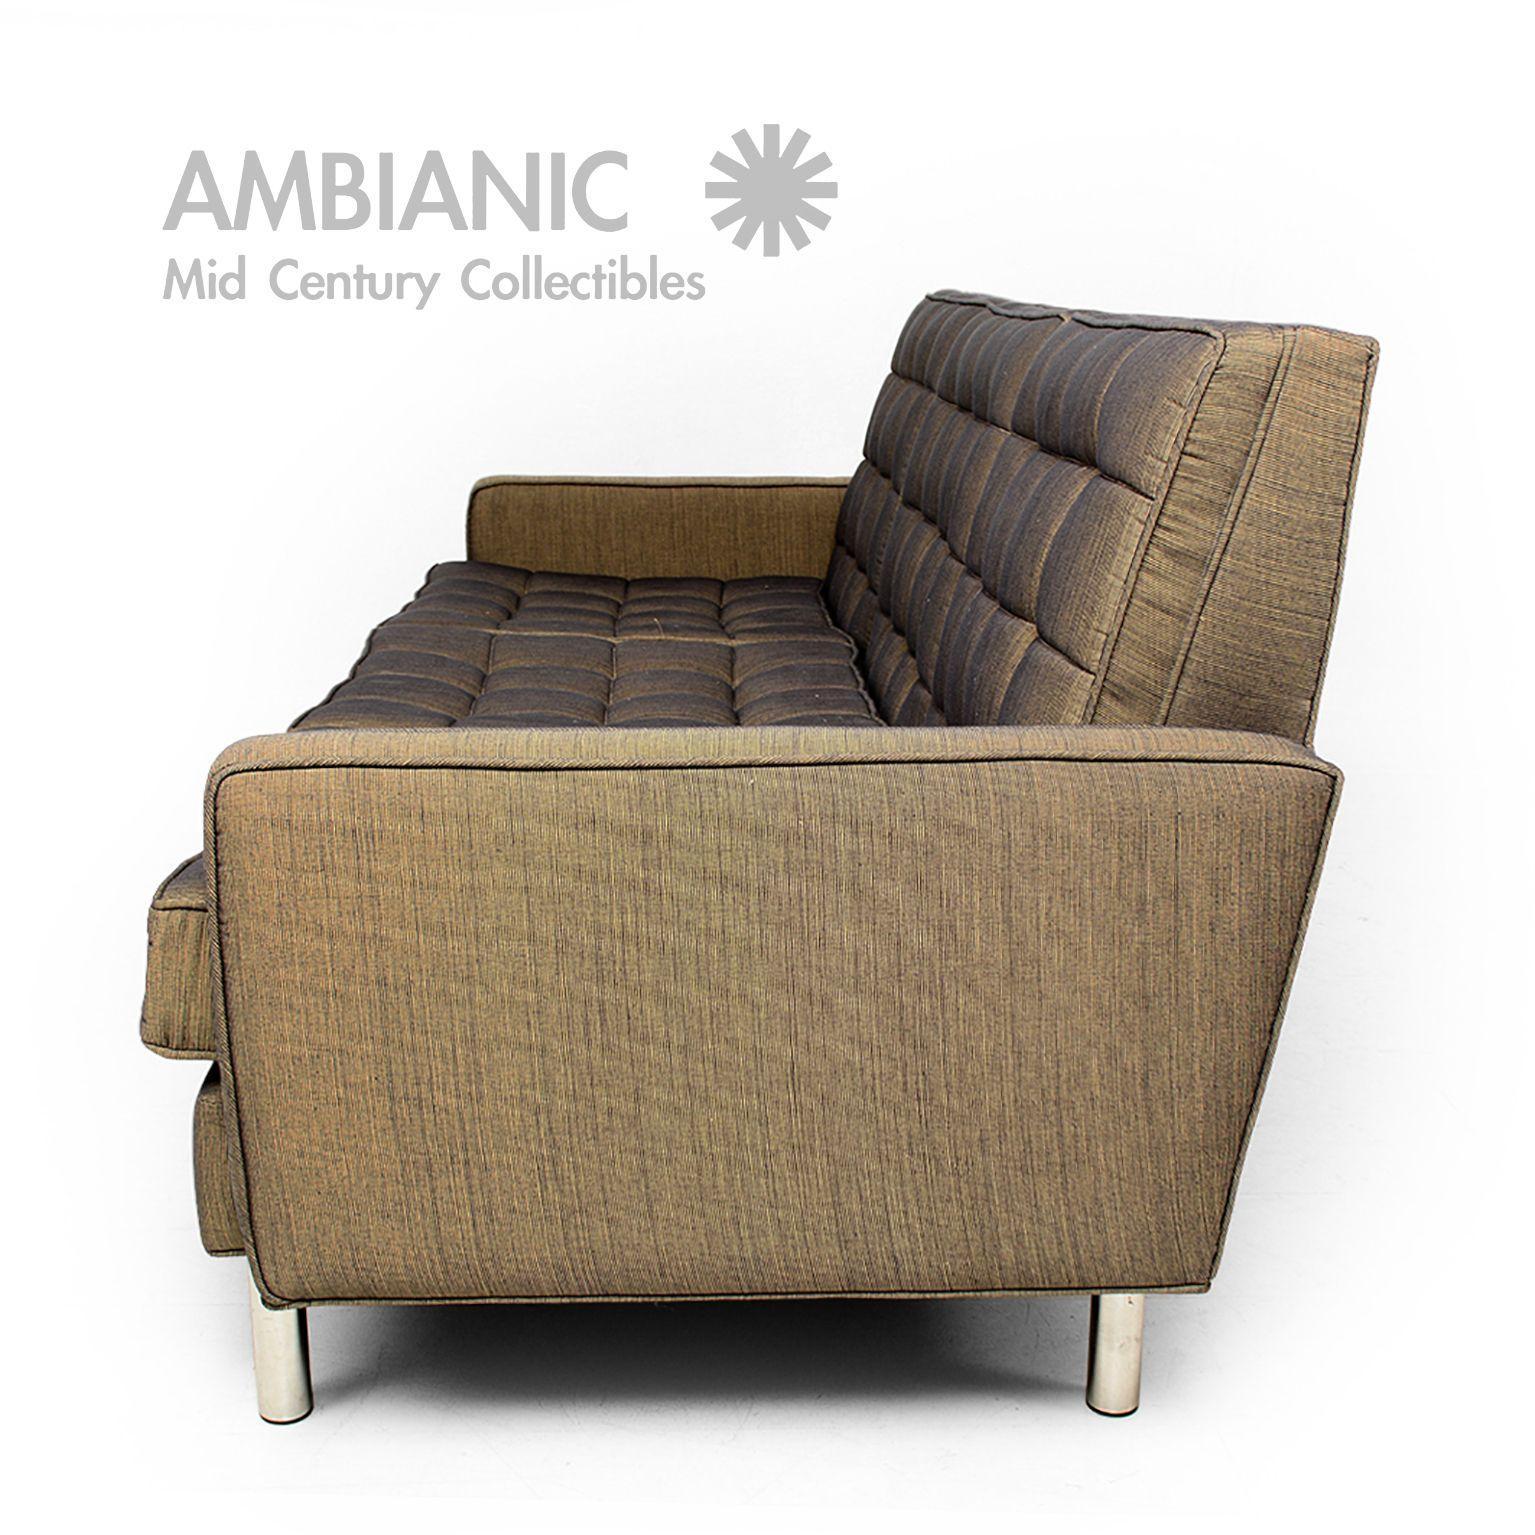 Fabric Classic Mid-Century Modern Florence Knoll Style Tufted Chrome Sofa, 1950s, USA